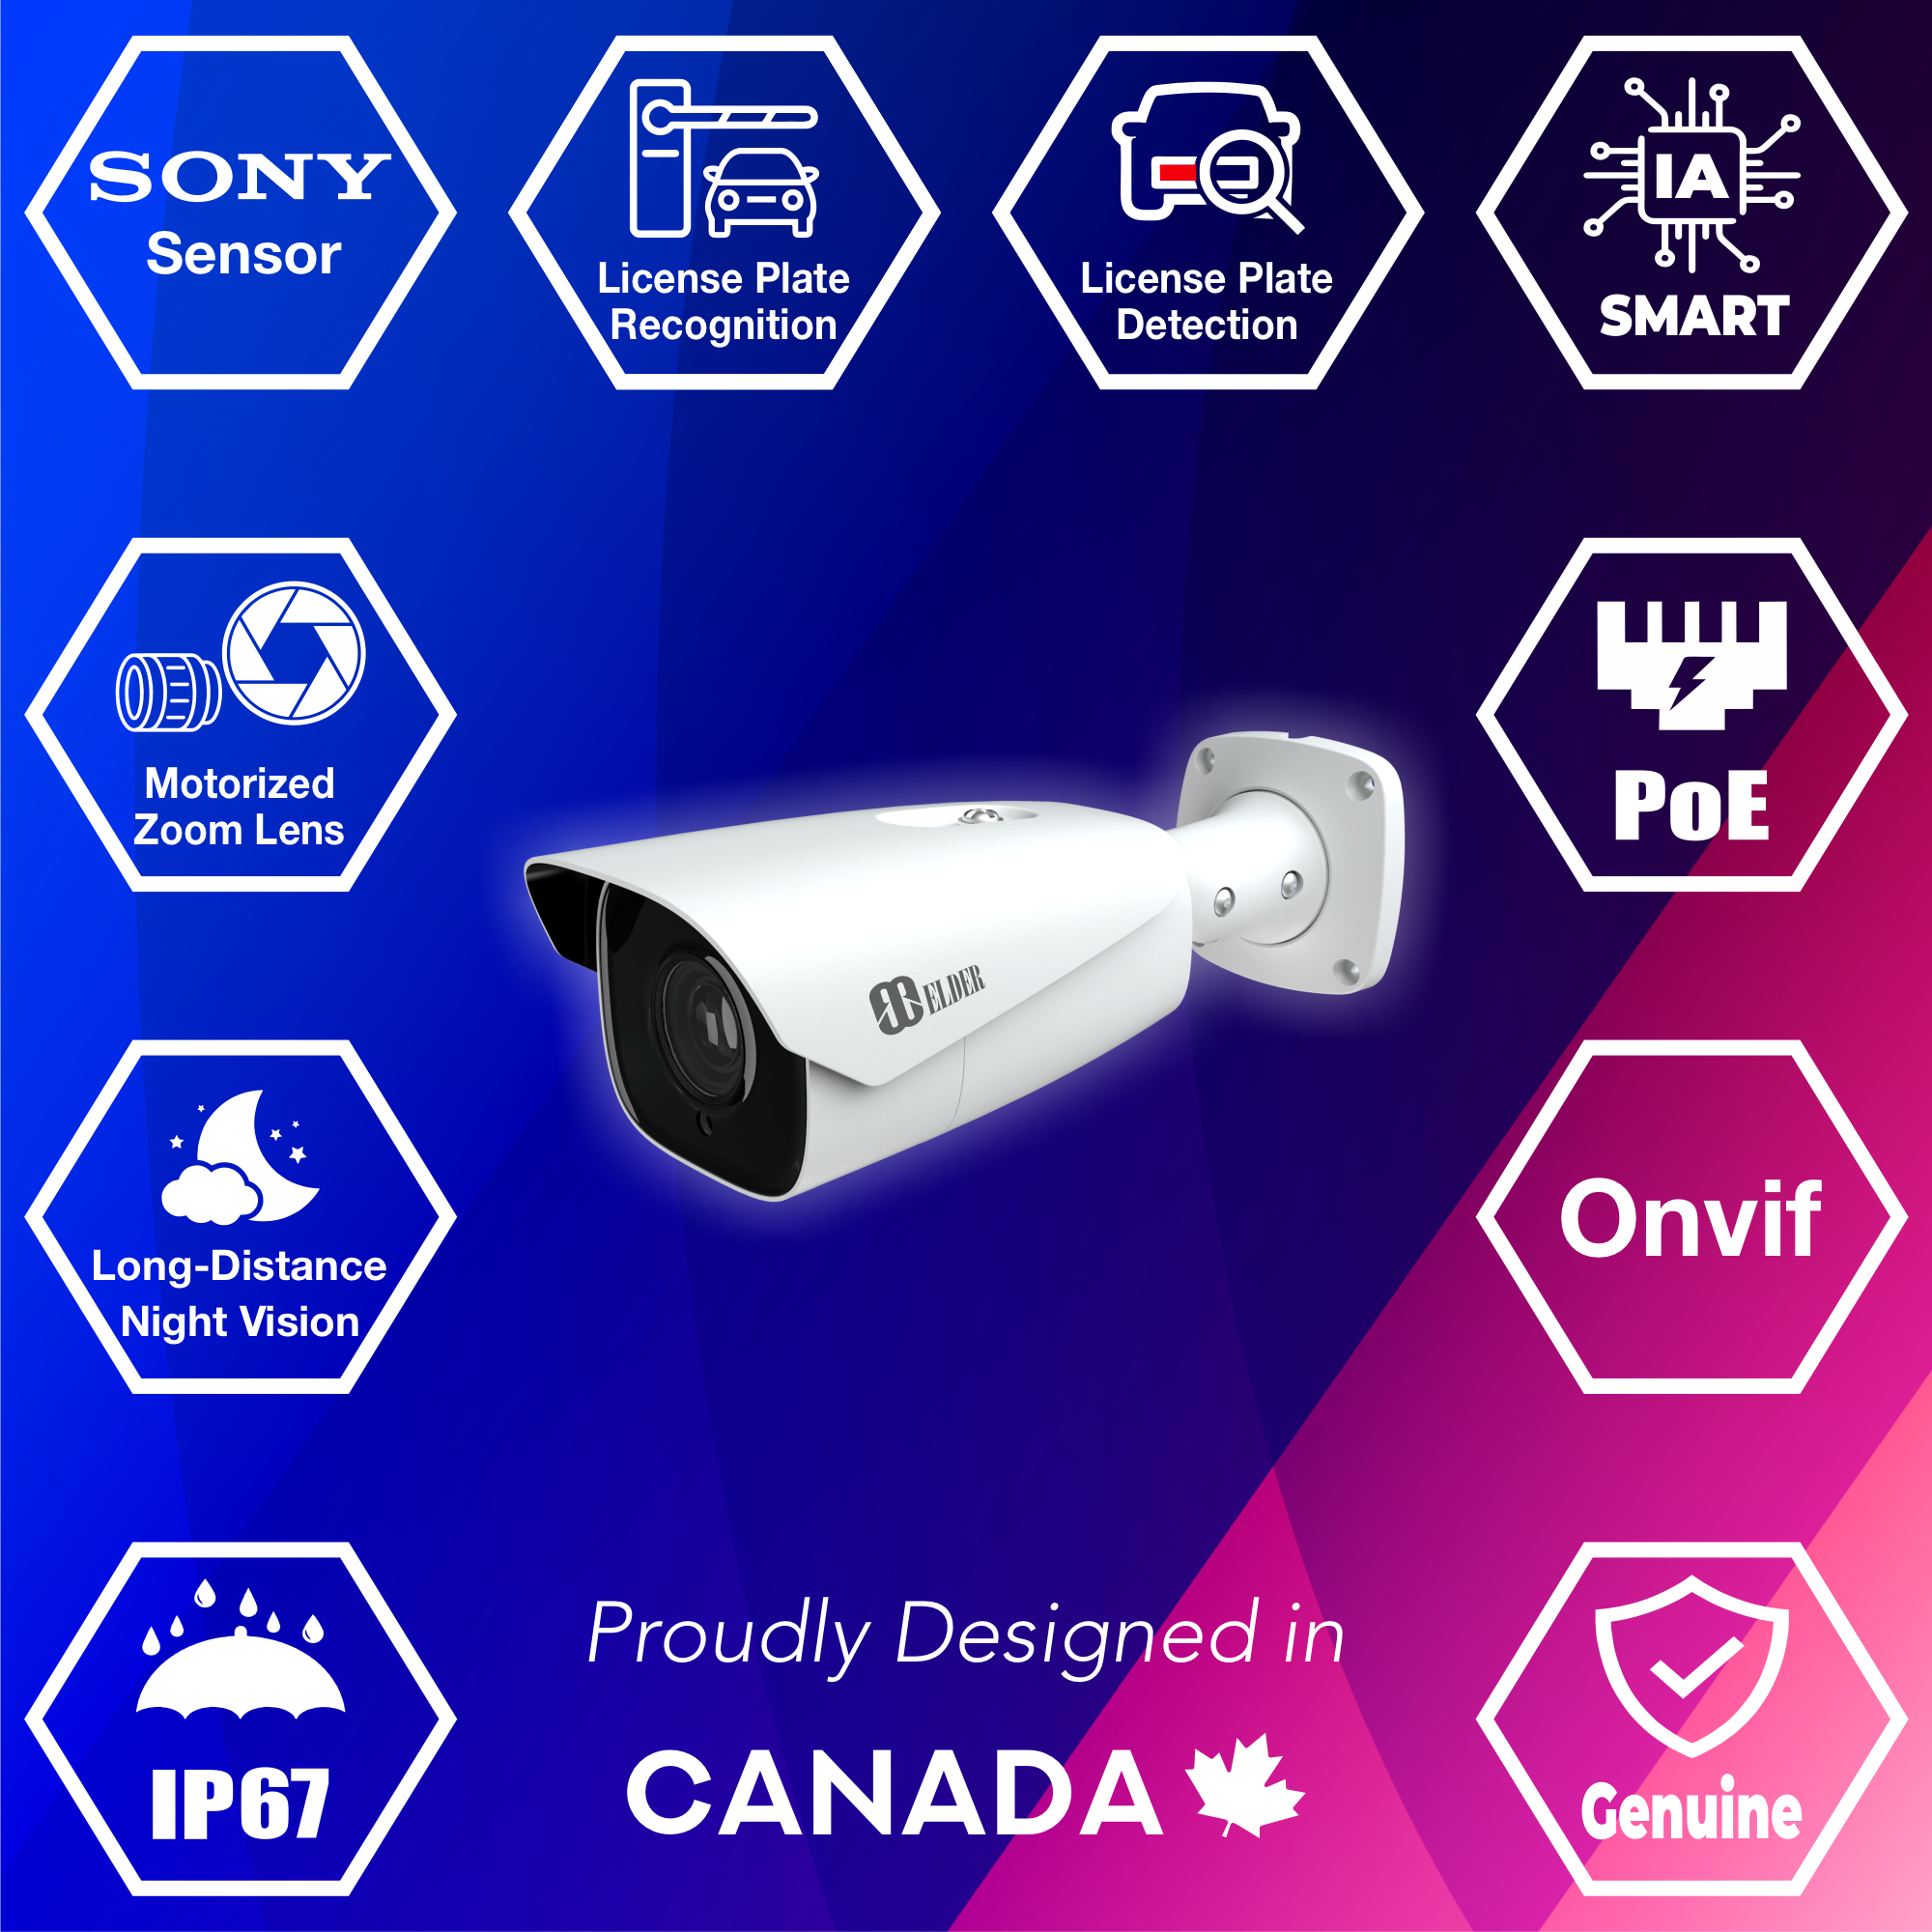 LPR Security Camera ANPR Surveillance PoE Outdoor, License Plate Recognition, Sony Sensor & Onvif, Starlight Long-Distance Night Vision, IP Bullet Ultimate-I Series